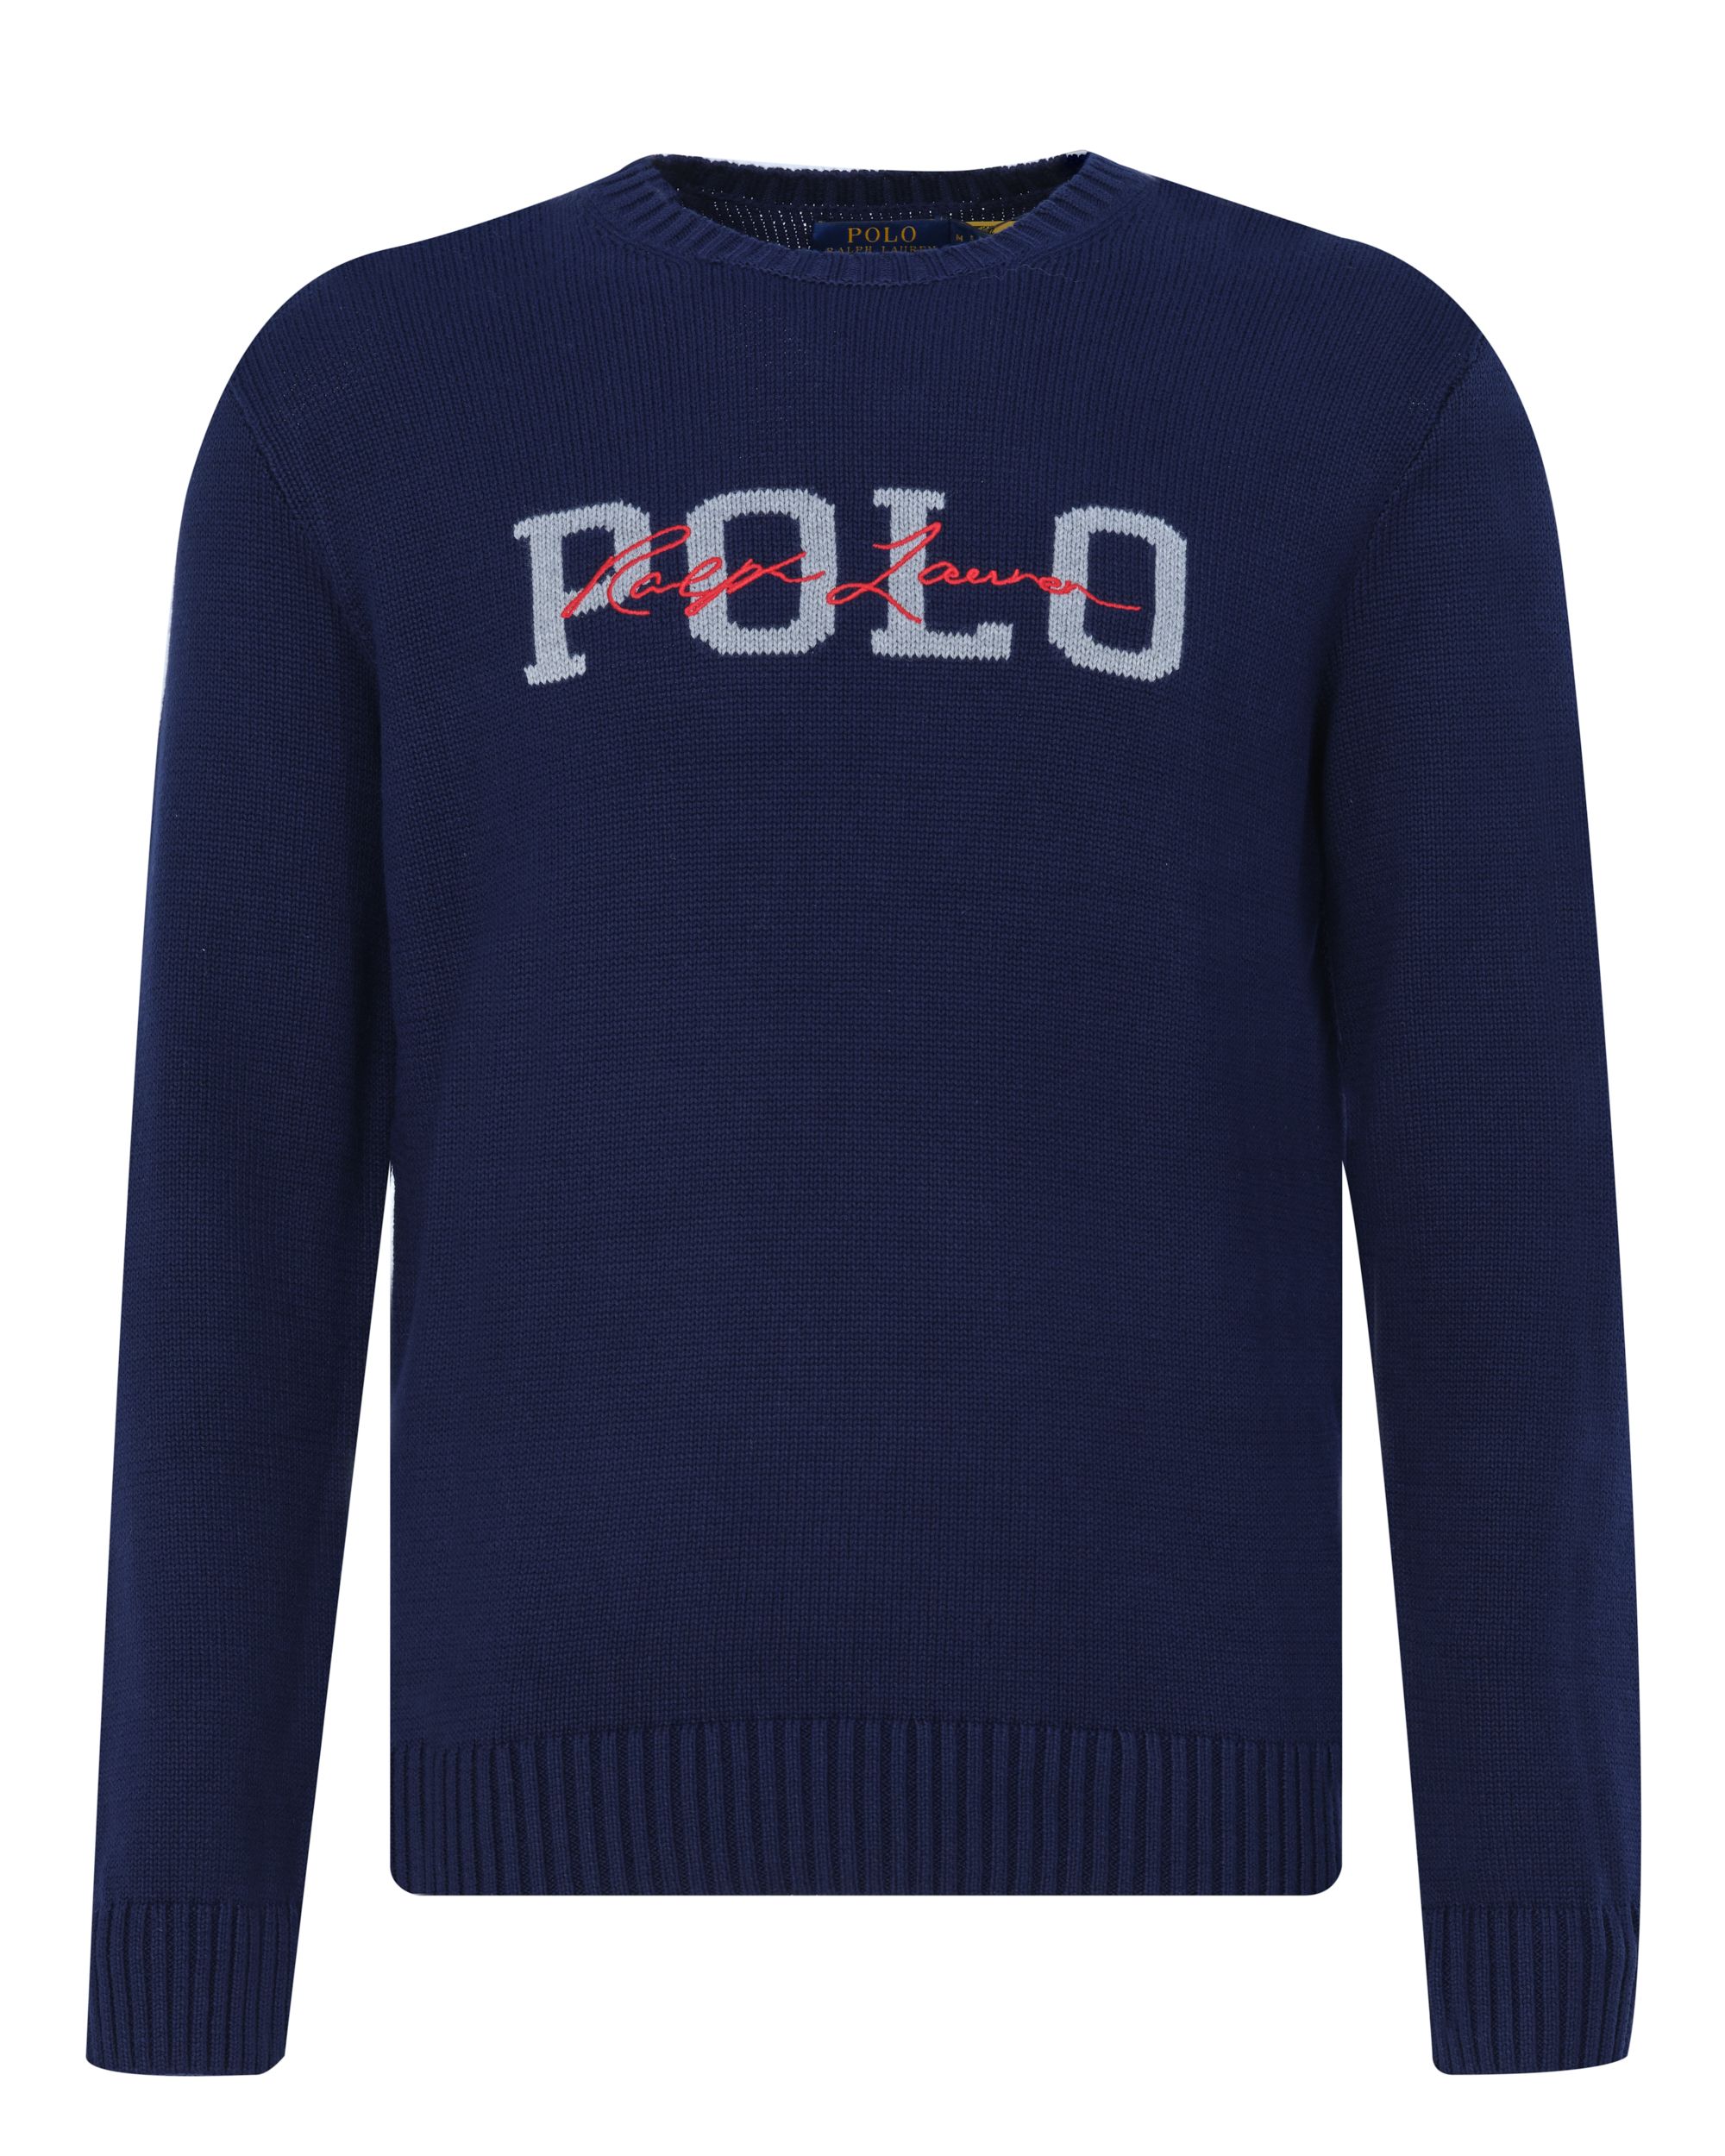 Polo Ralph Lauren Sweater Donker blauw 080609-001-L